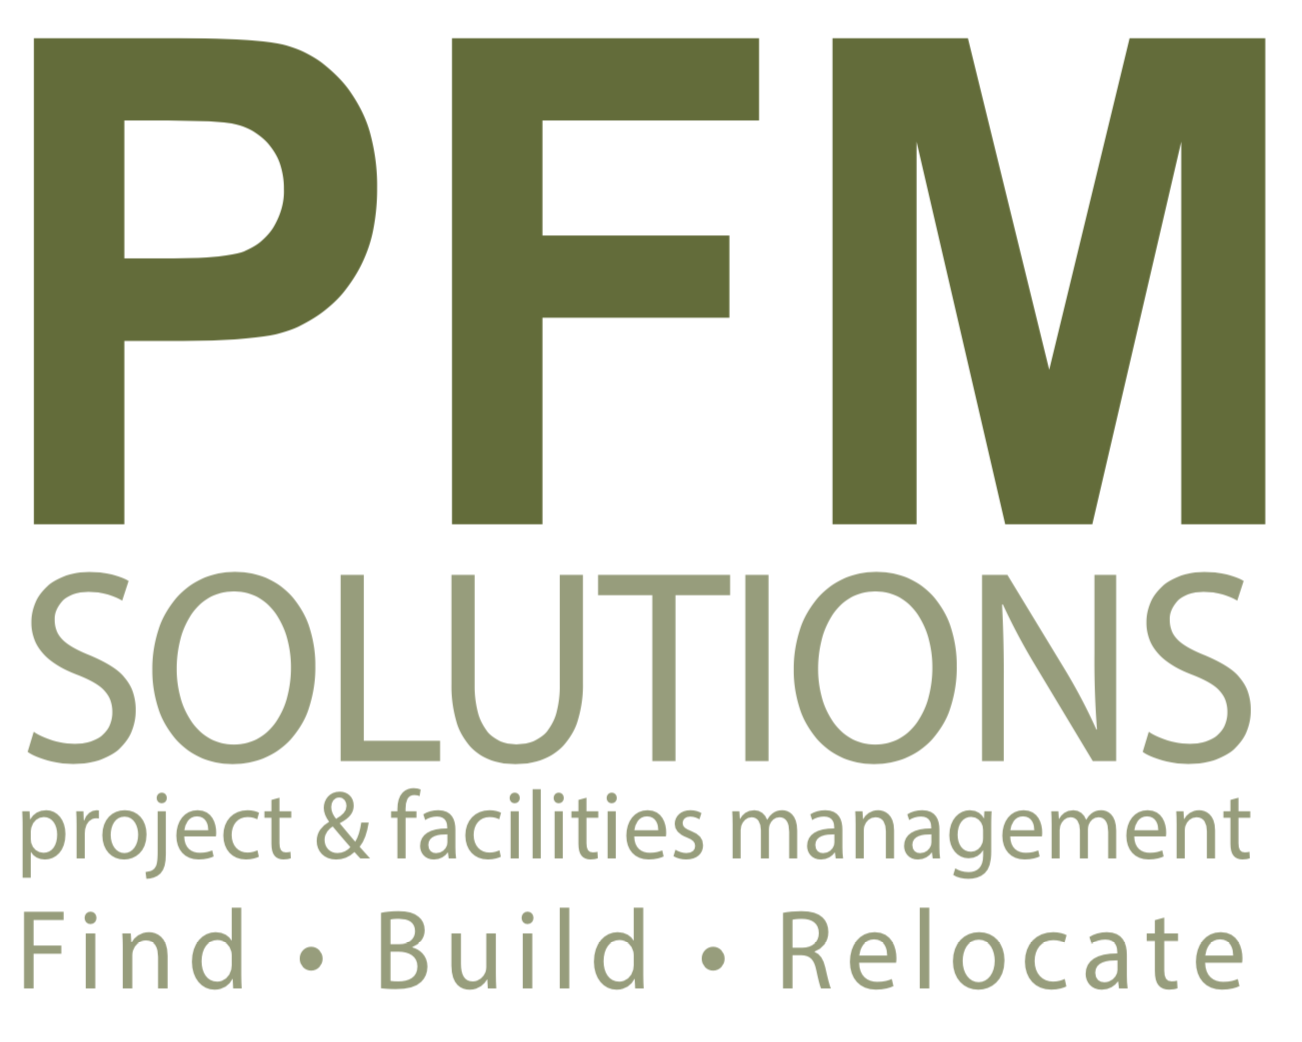 PFM Solutions